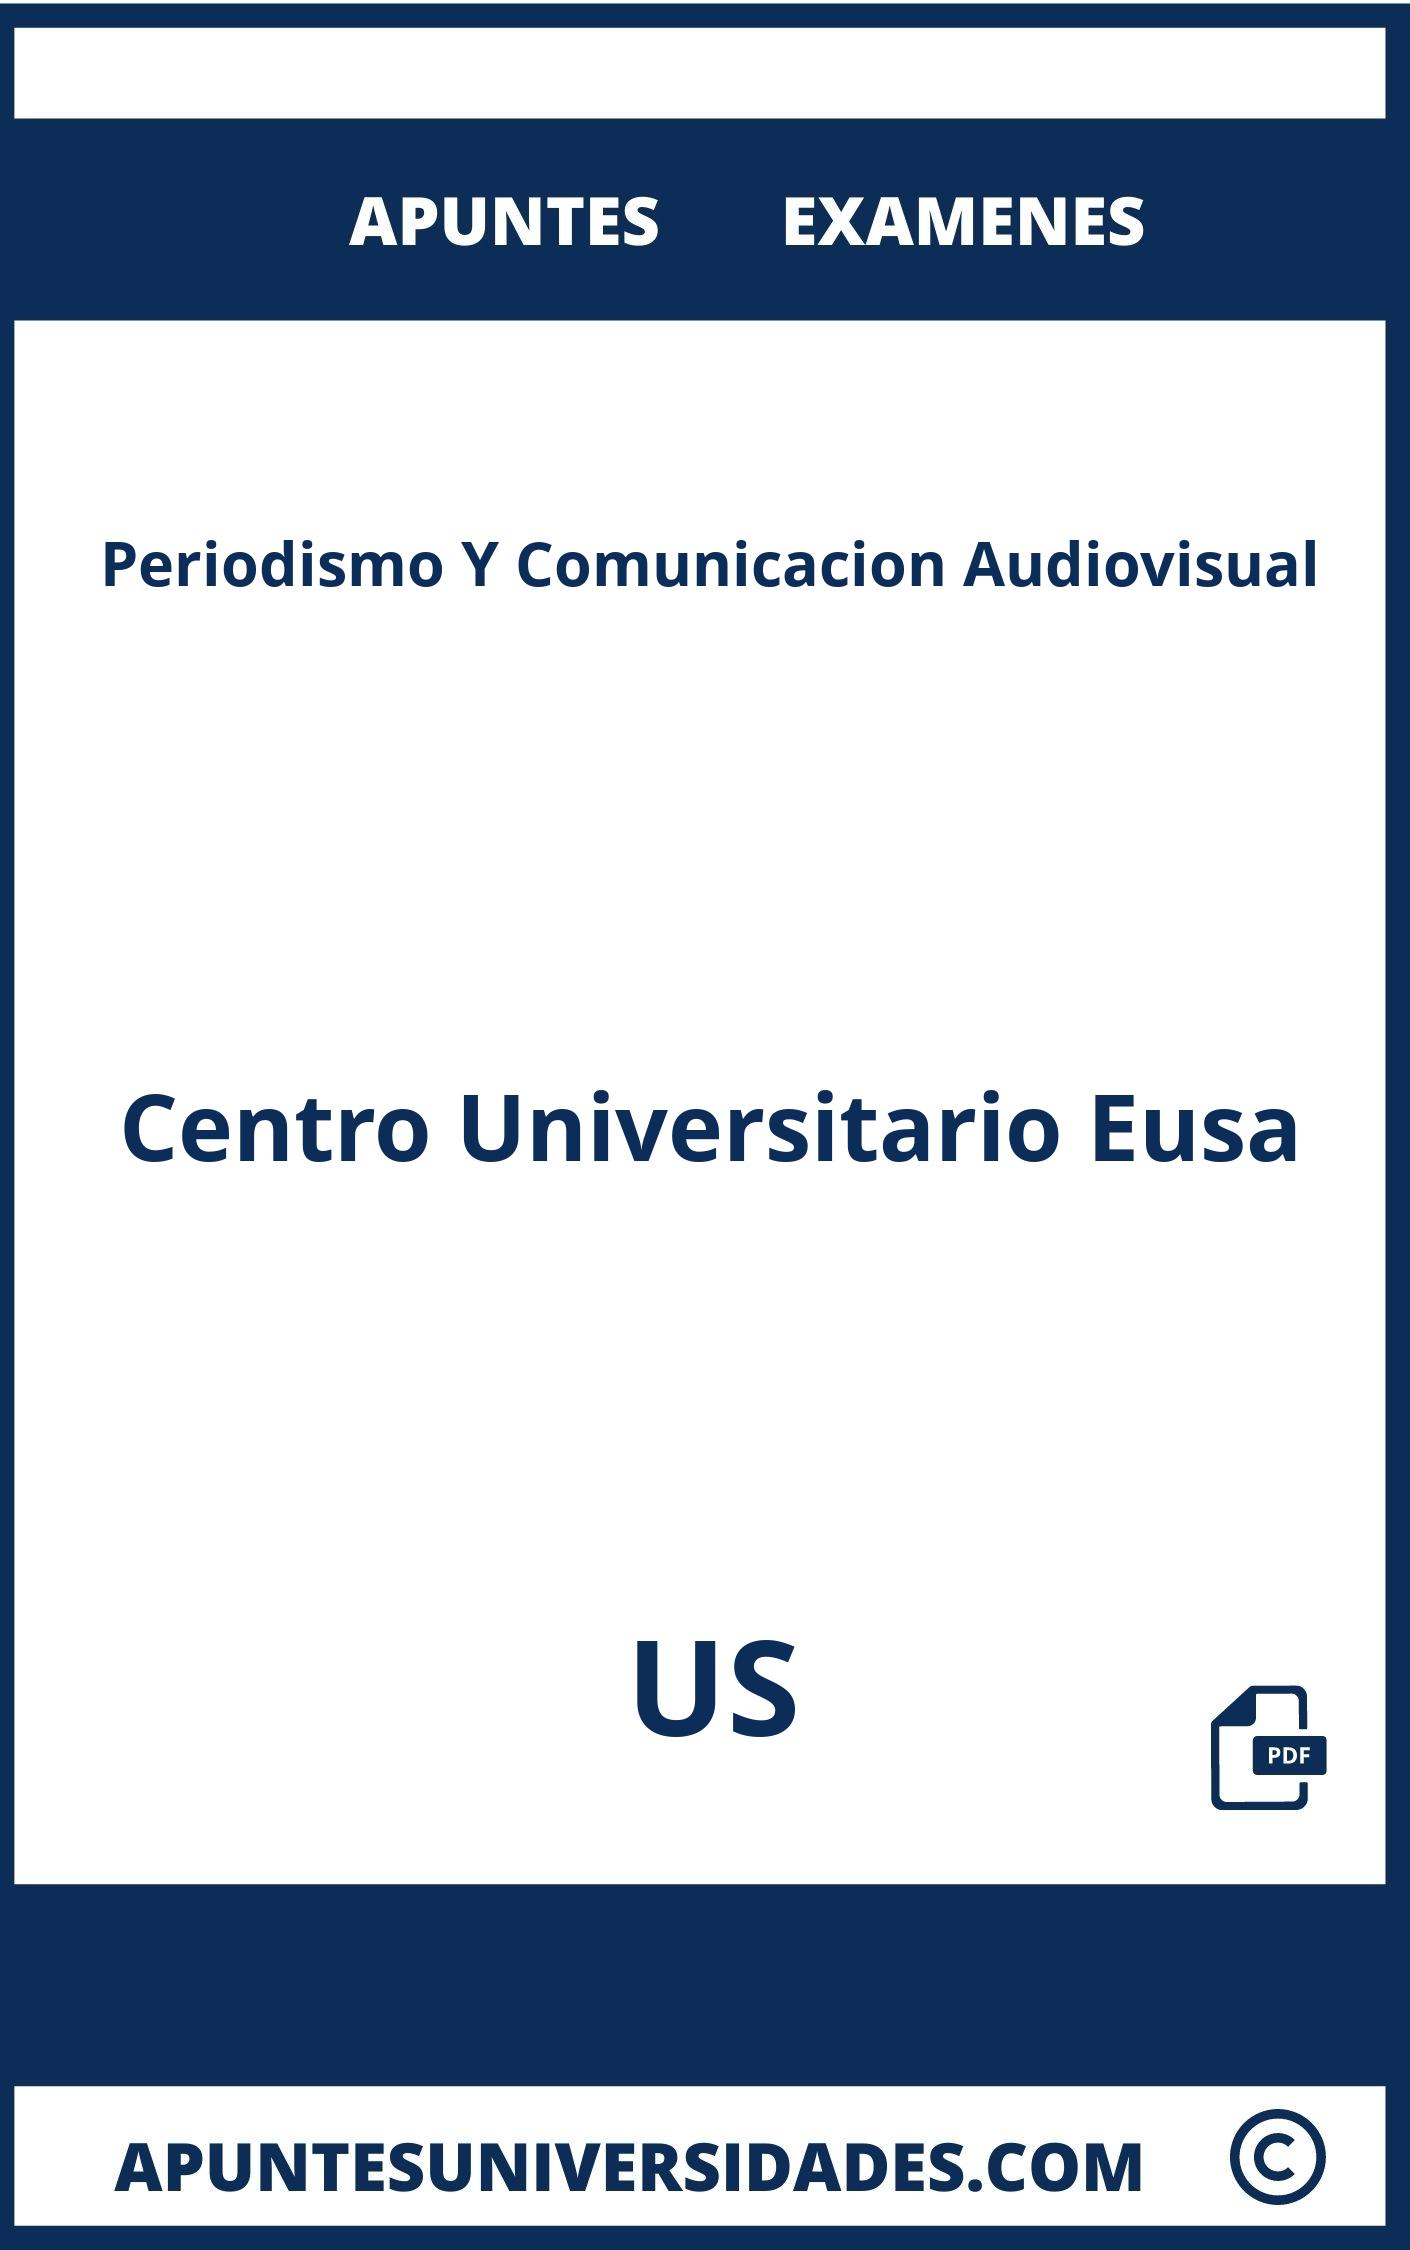 Periodismo Y Comunicacion Audiovisual US Examenes Apuntes